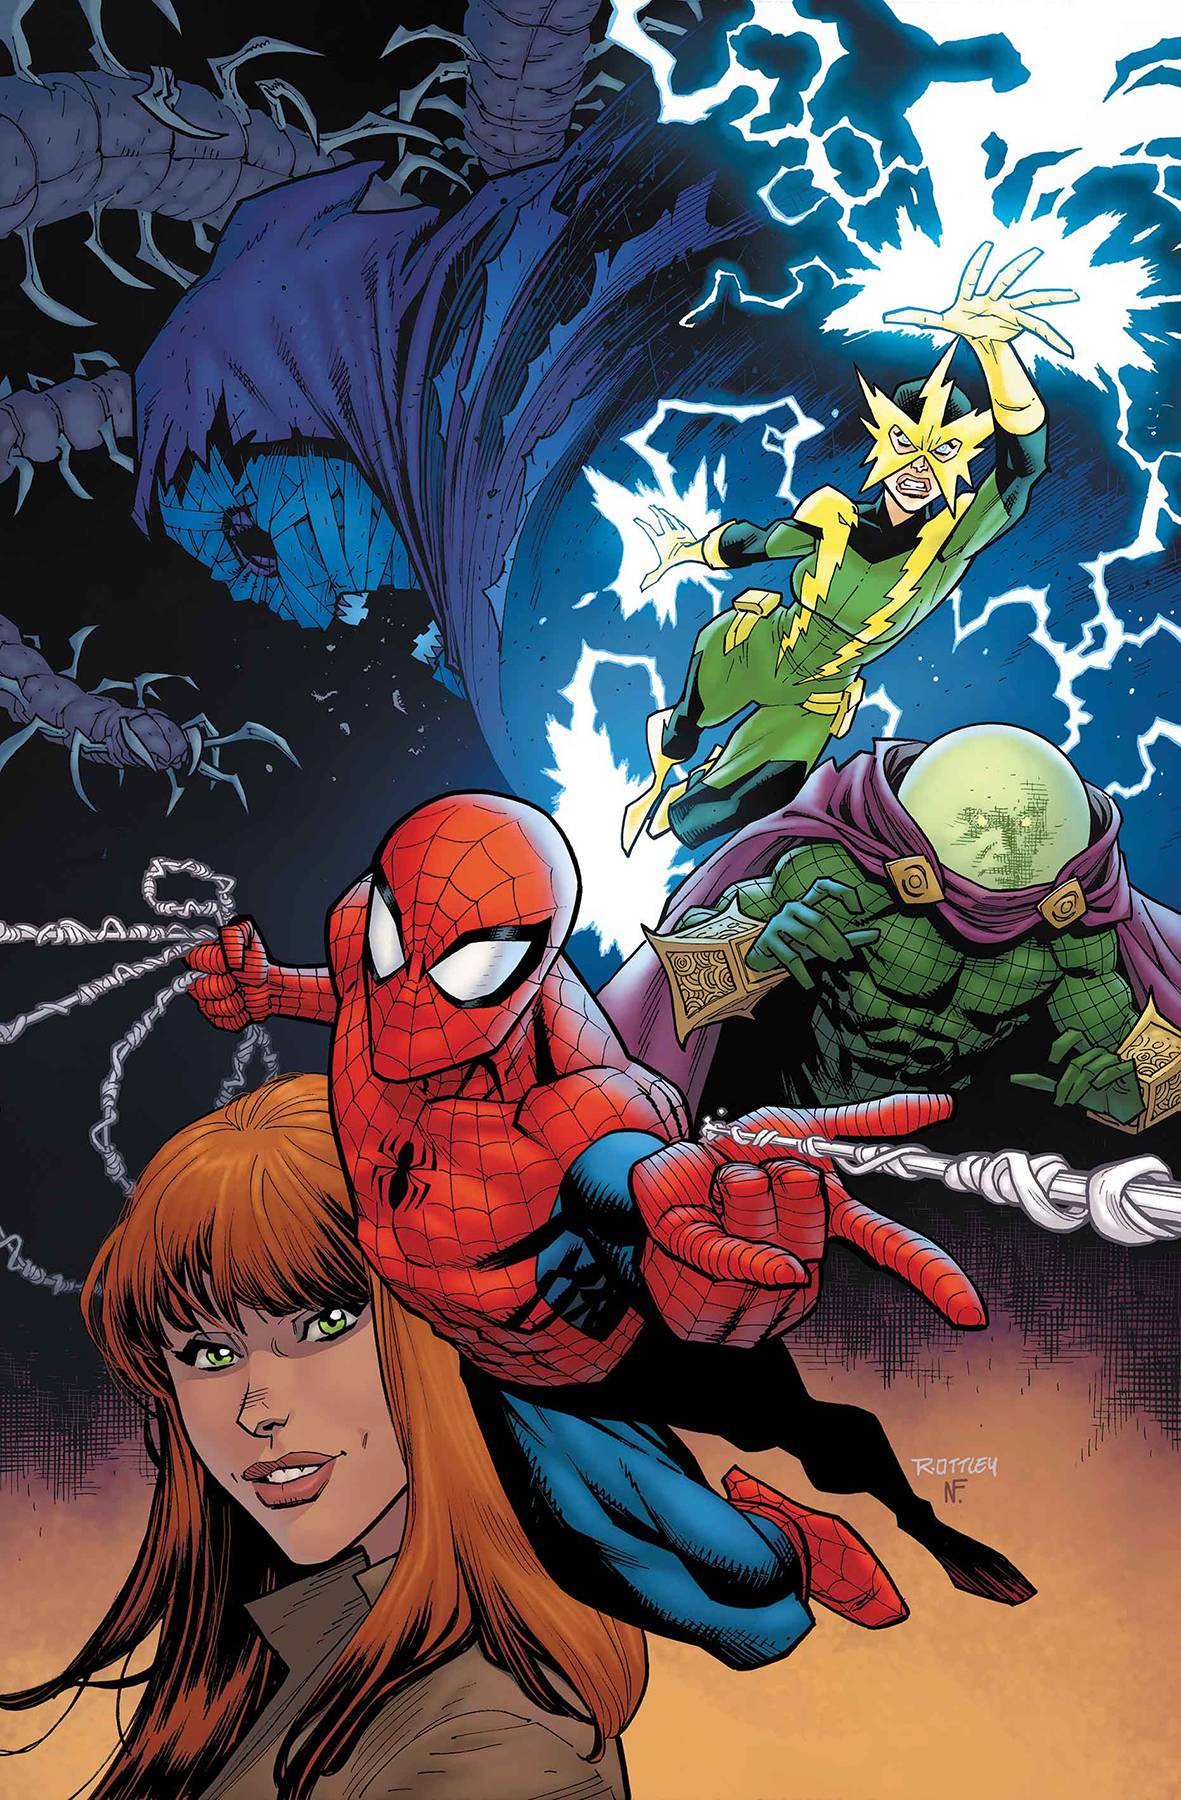 scans_daily  Amazing Spider-Man #25